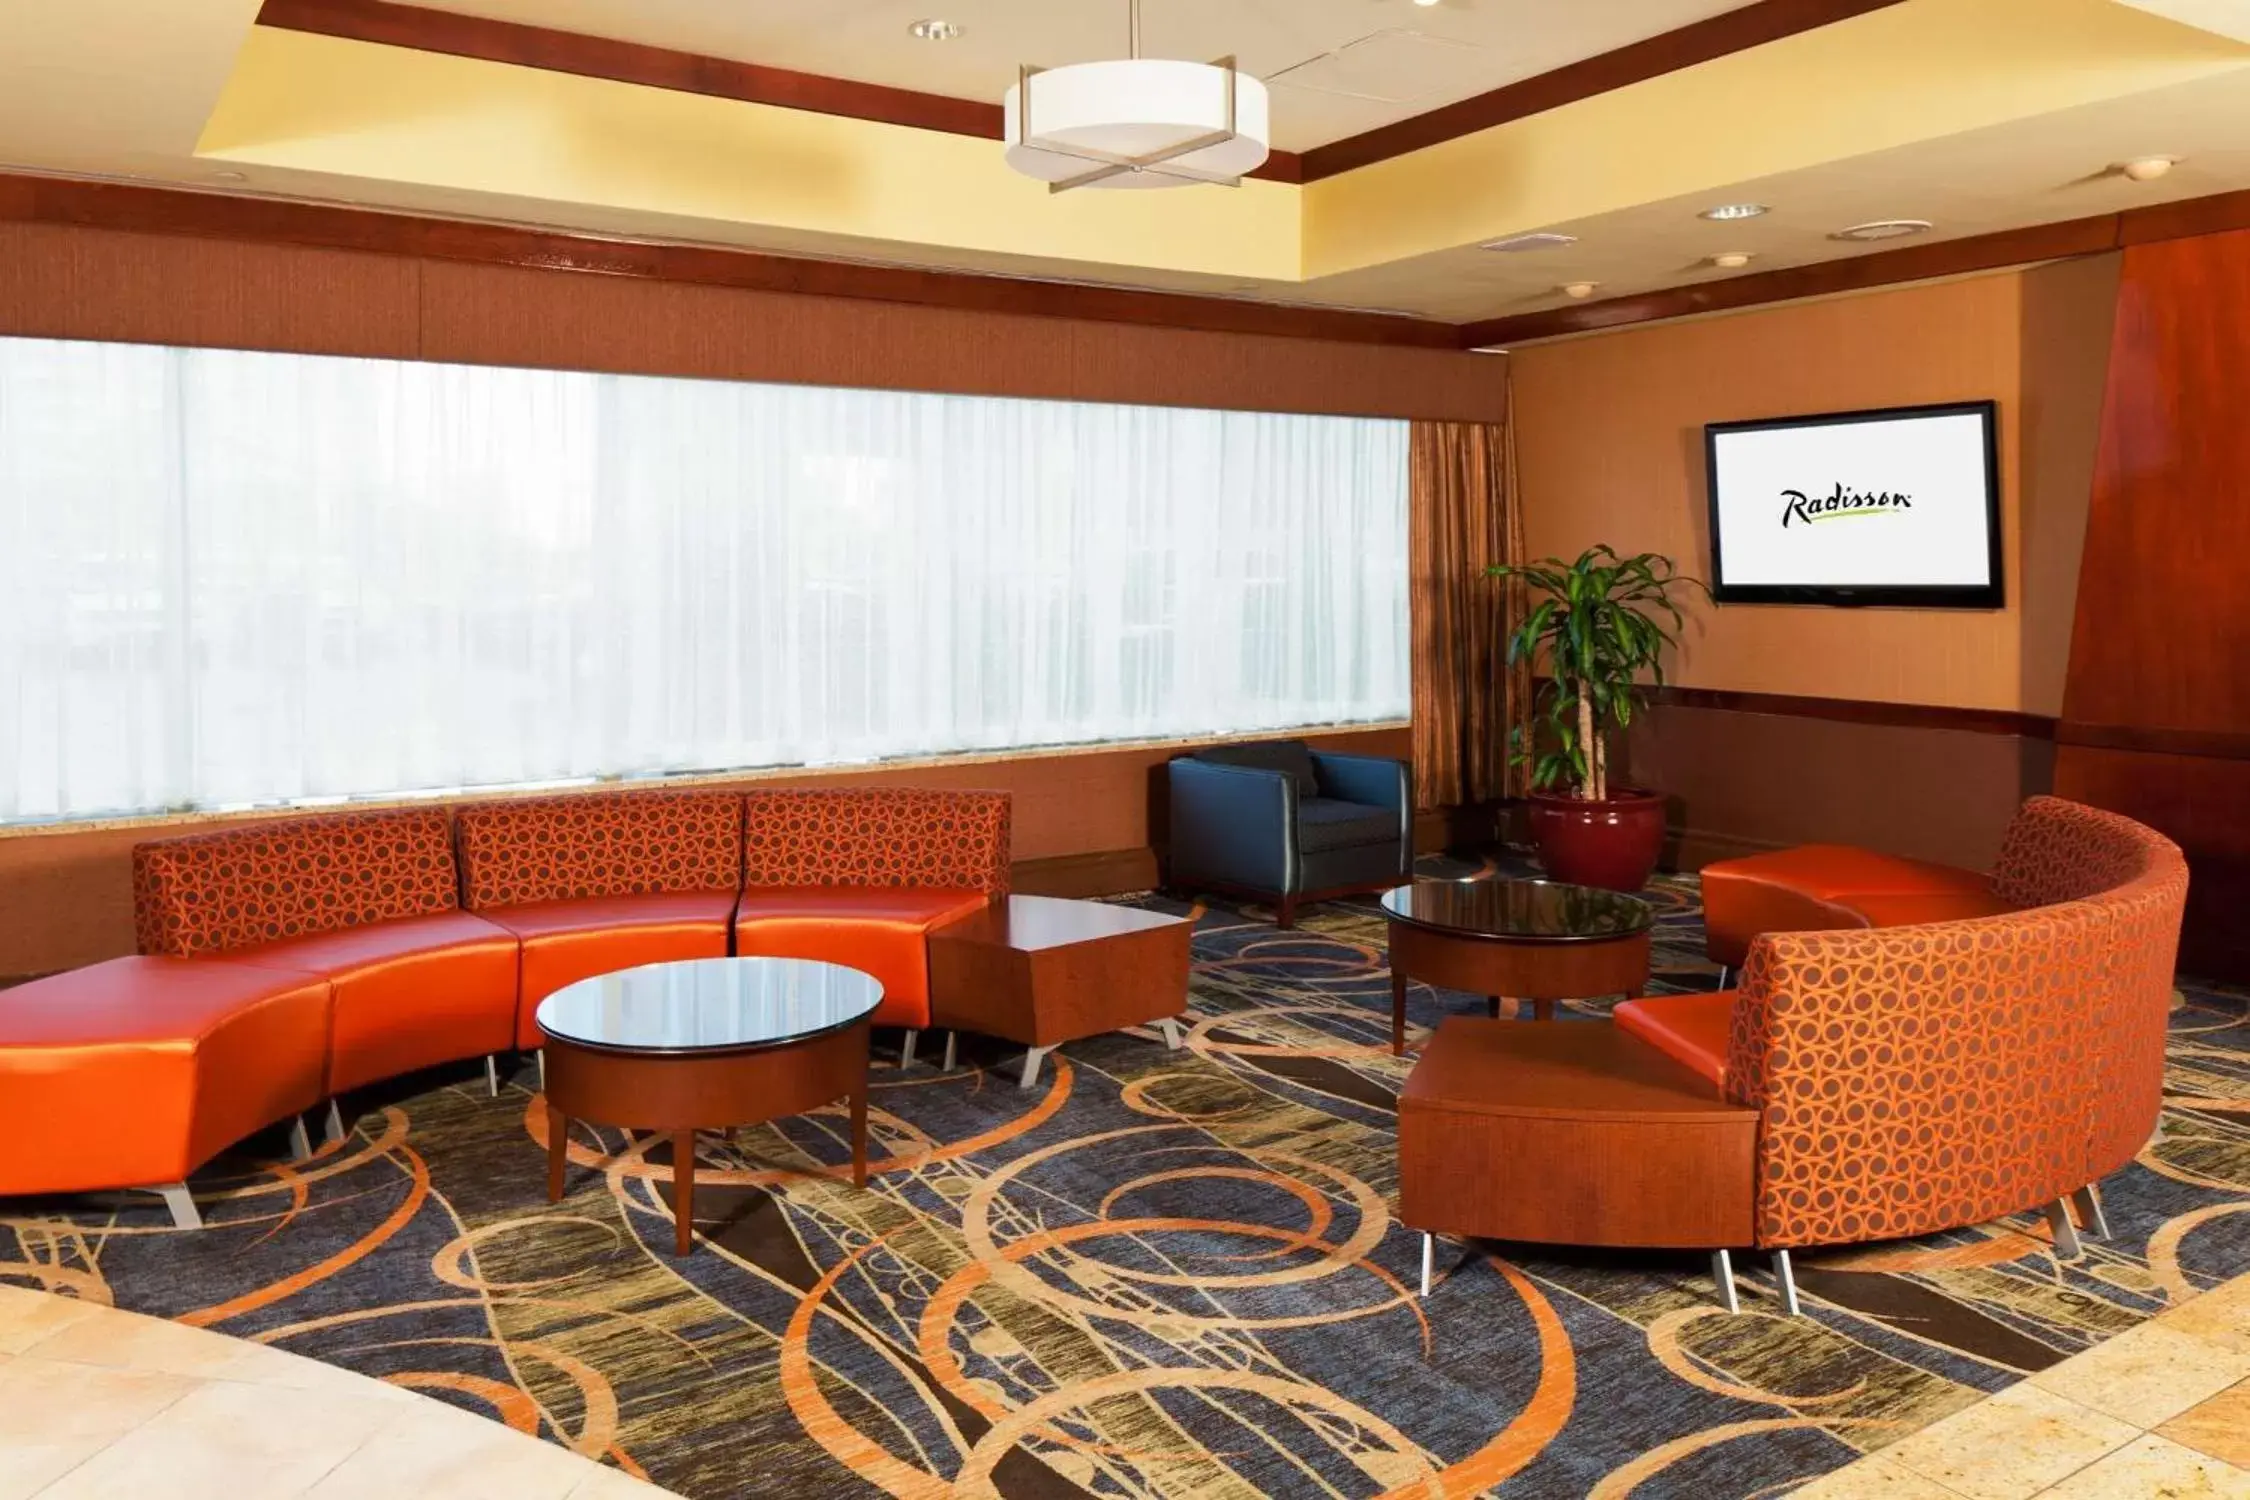 Lobby or reception in Radisson Hotel JFK Airport